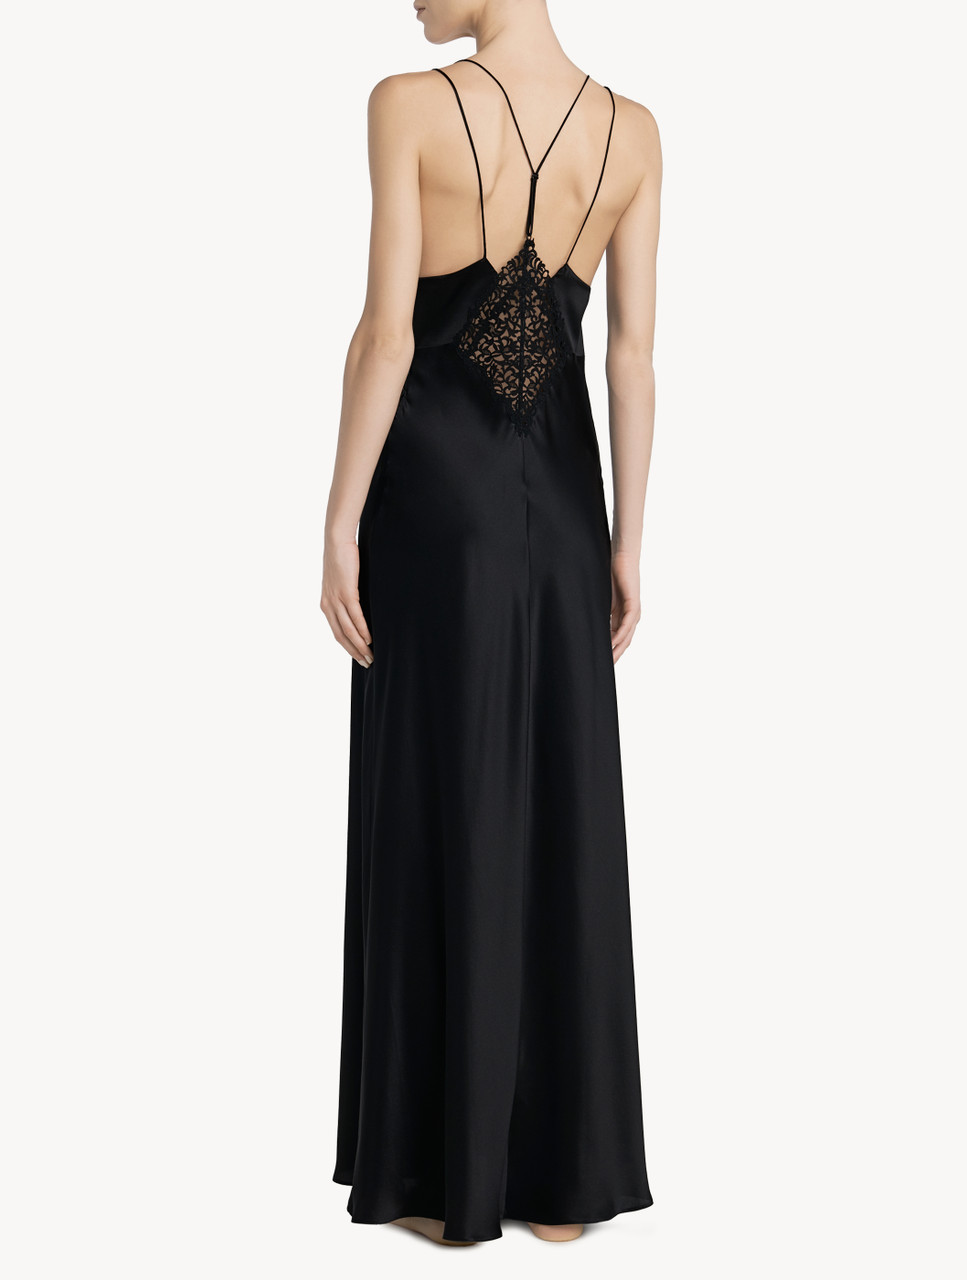 ALSLIAO Womens Dresses Faux Satin Silk Dress Slips Strappy Sexy V-neck  Party Nightdress Black XL 